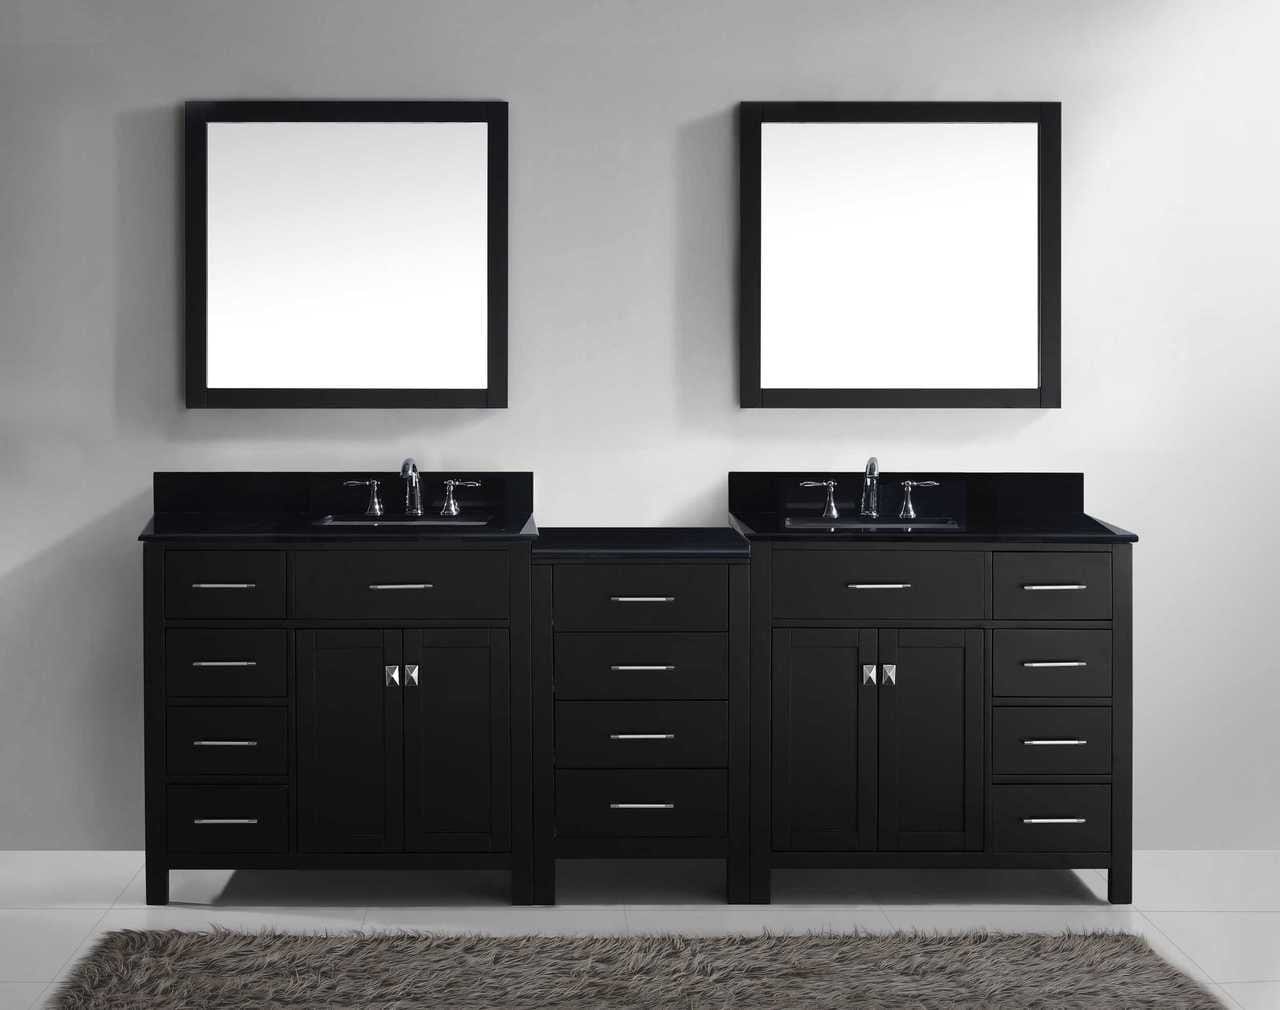 Virtu USA Caroline Parkway 93" Double Bathroom Vanity Set in Espresso w/ Black Galaxy Granite Counter-Top | Square Basin